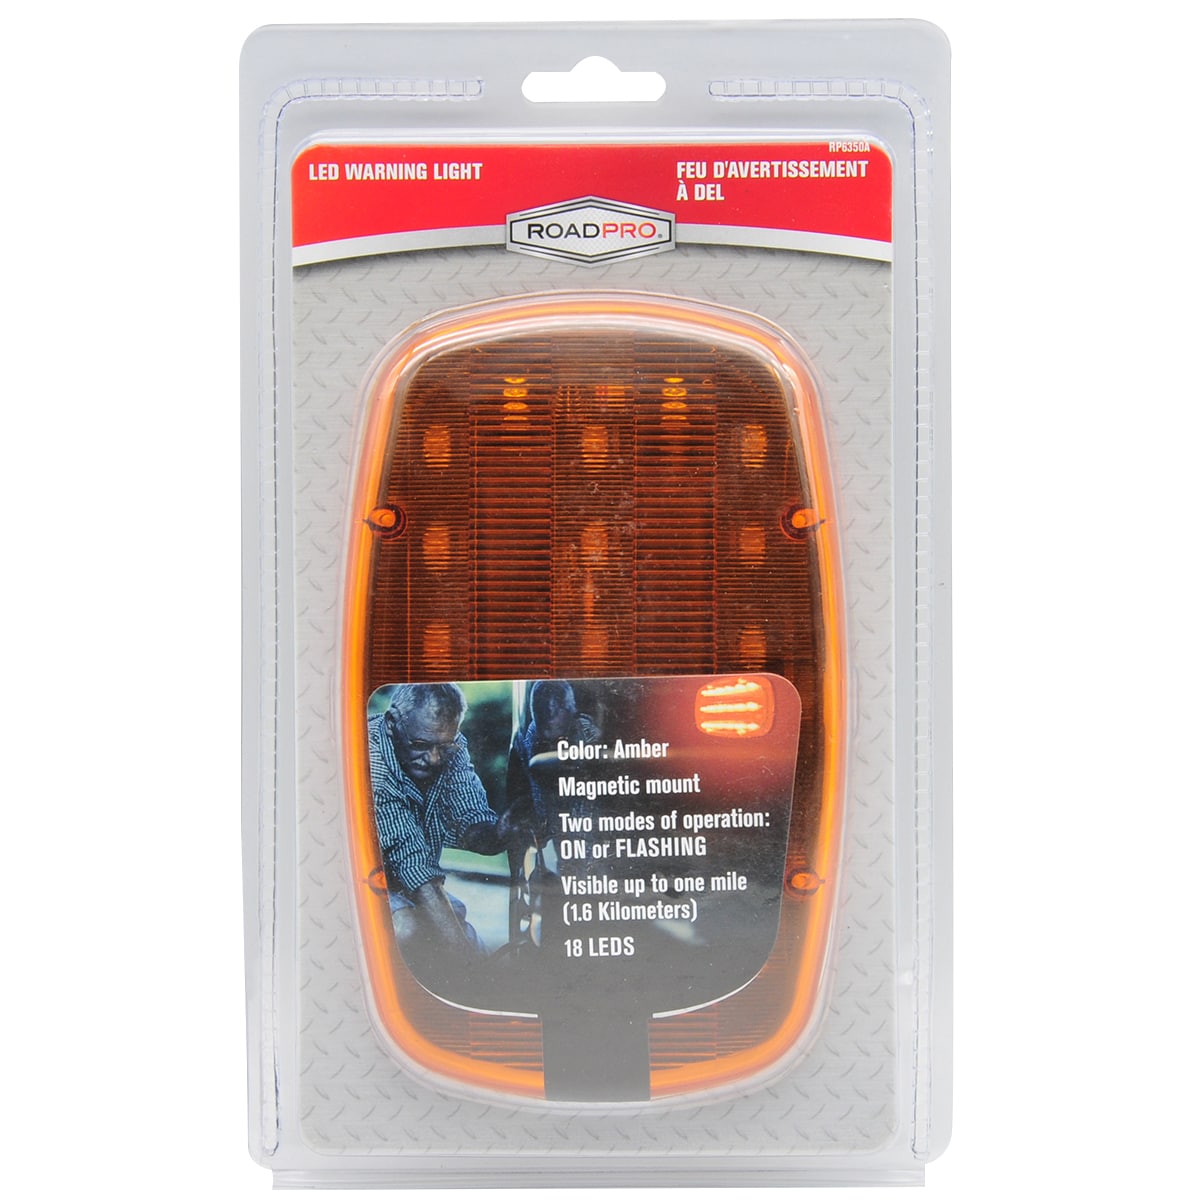 Larson Electronics Heavy Duty Portable Warning Light - Red Battery